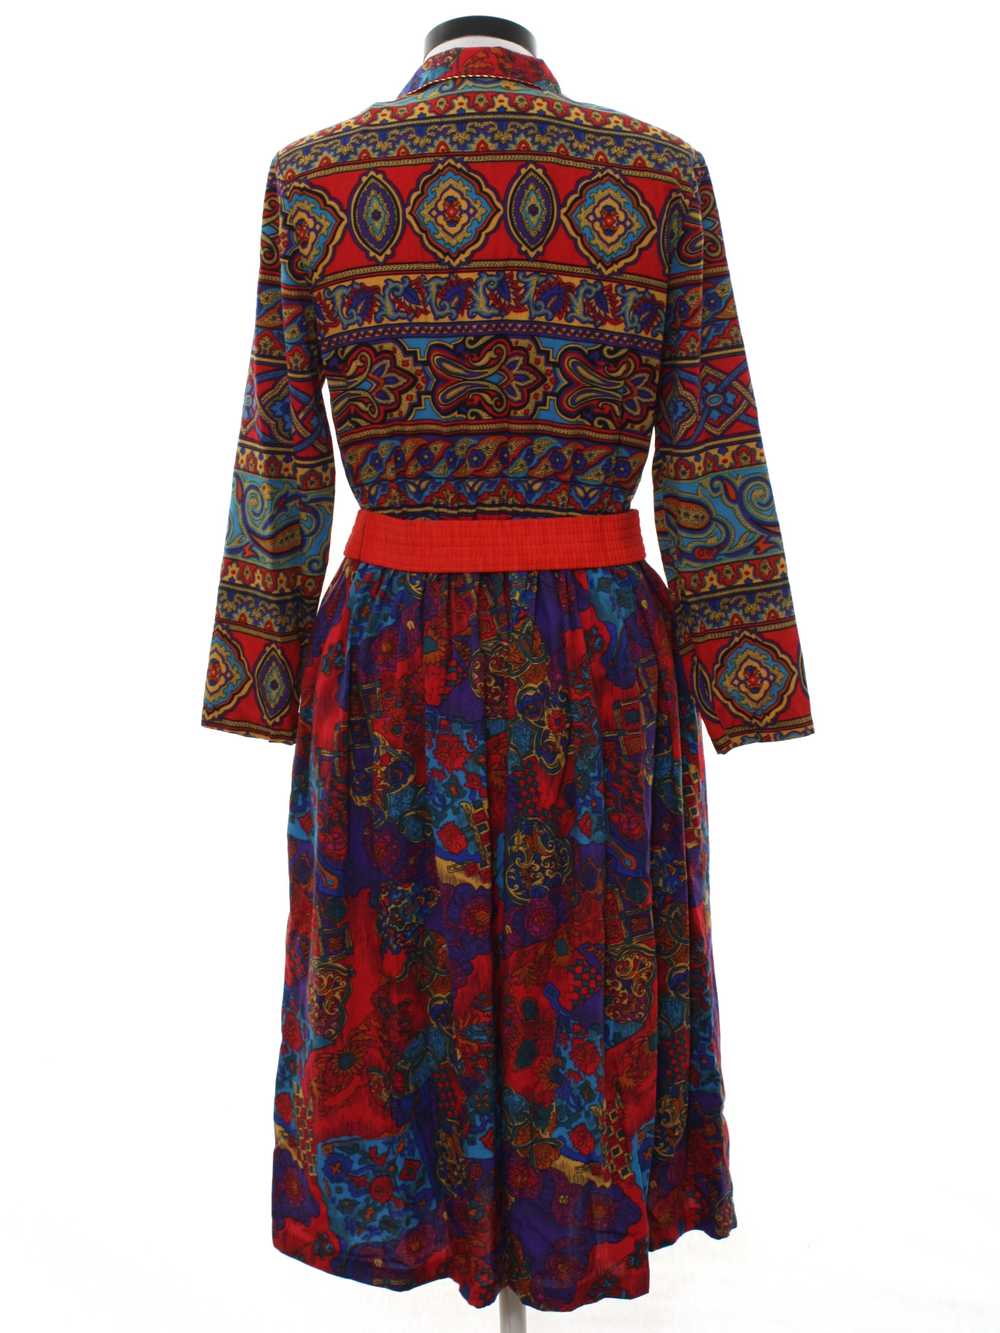 1980's Hippie Dress - image 3